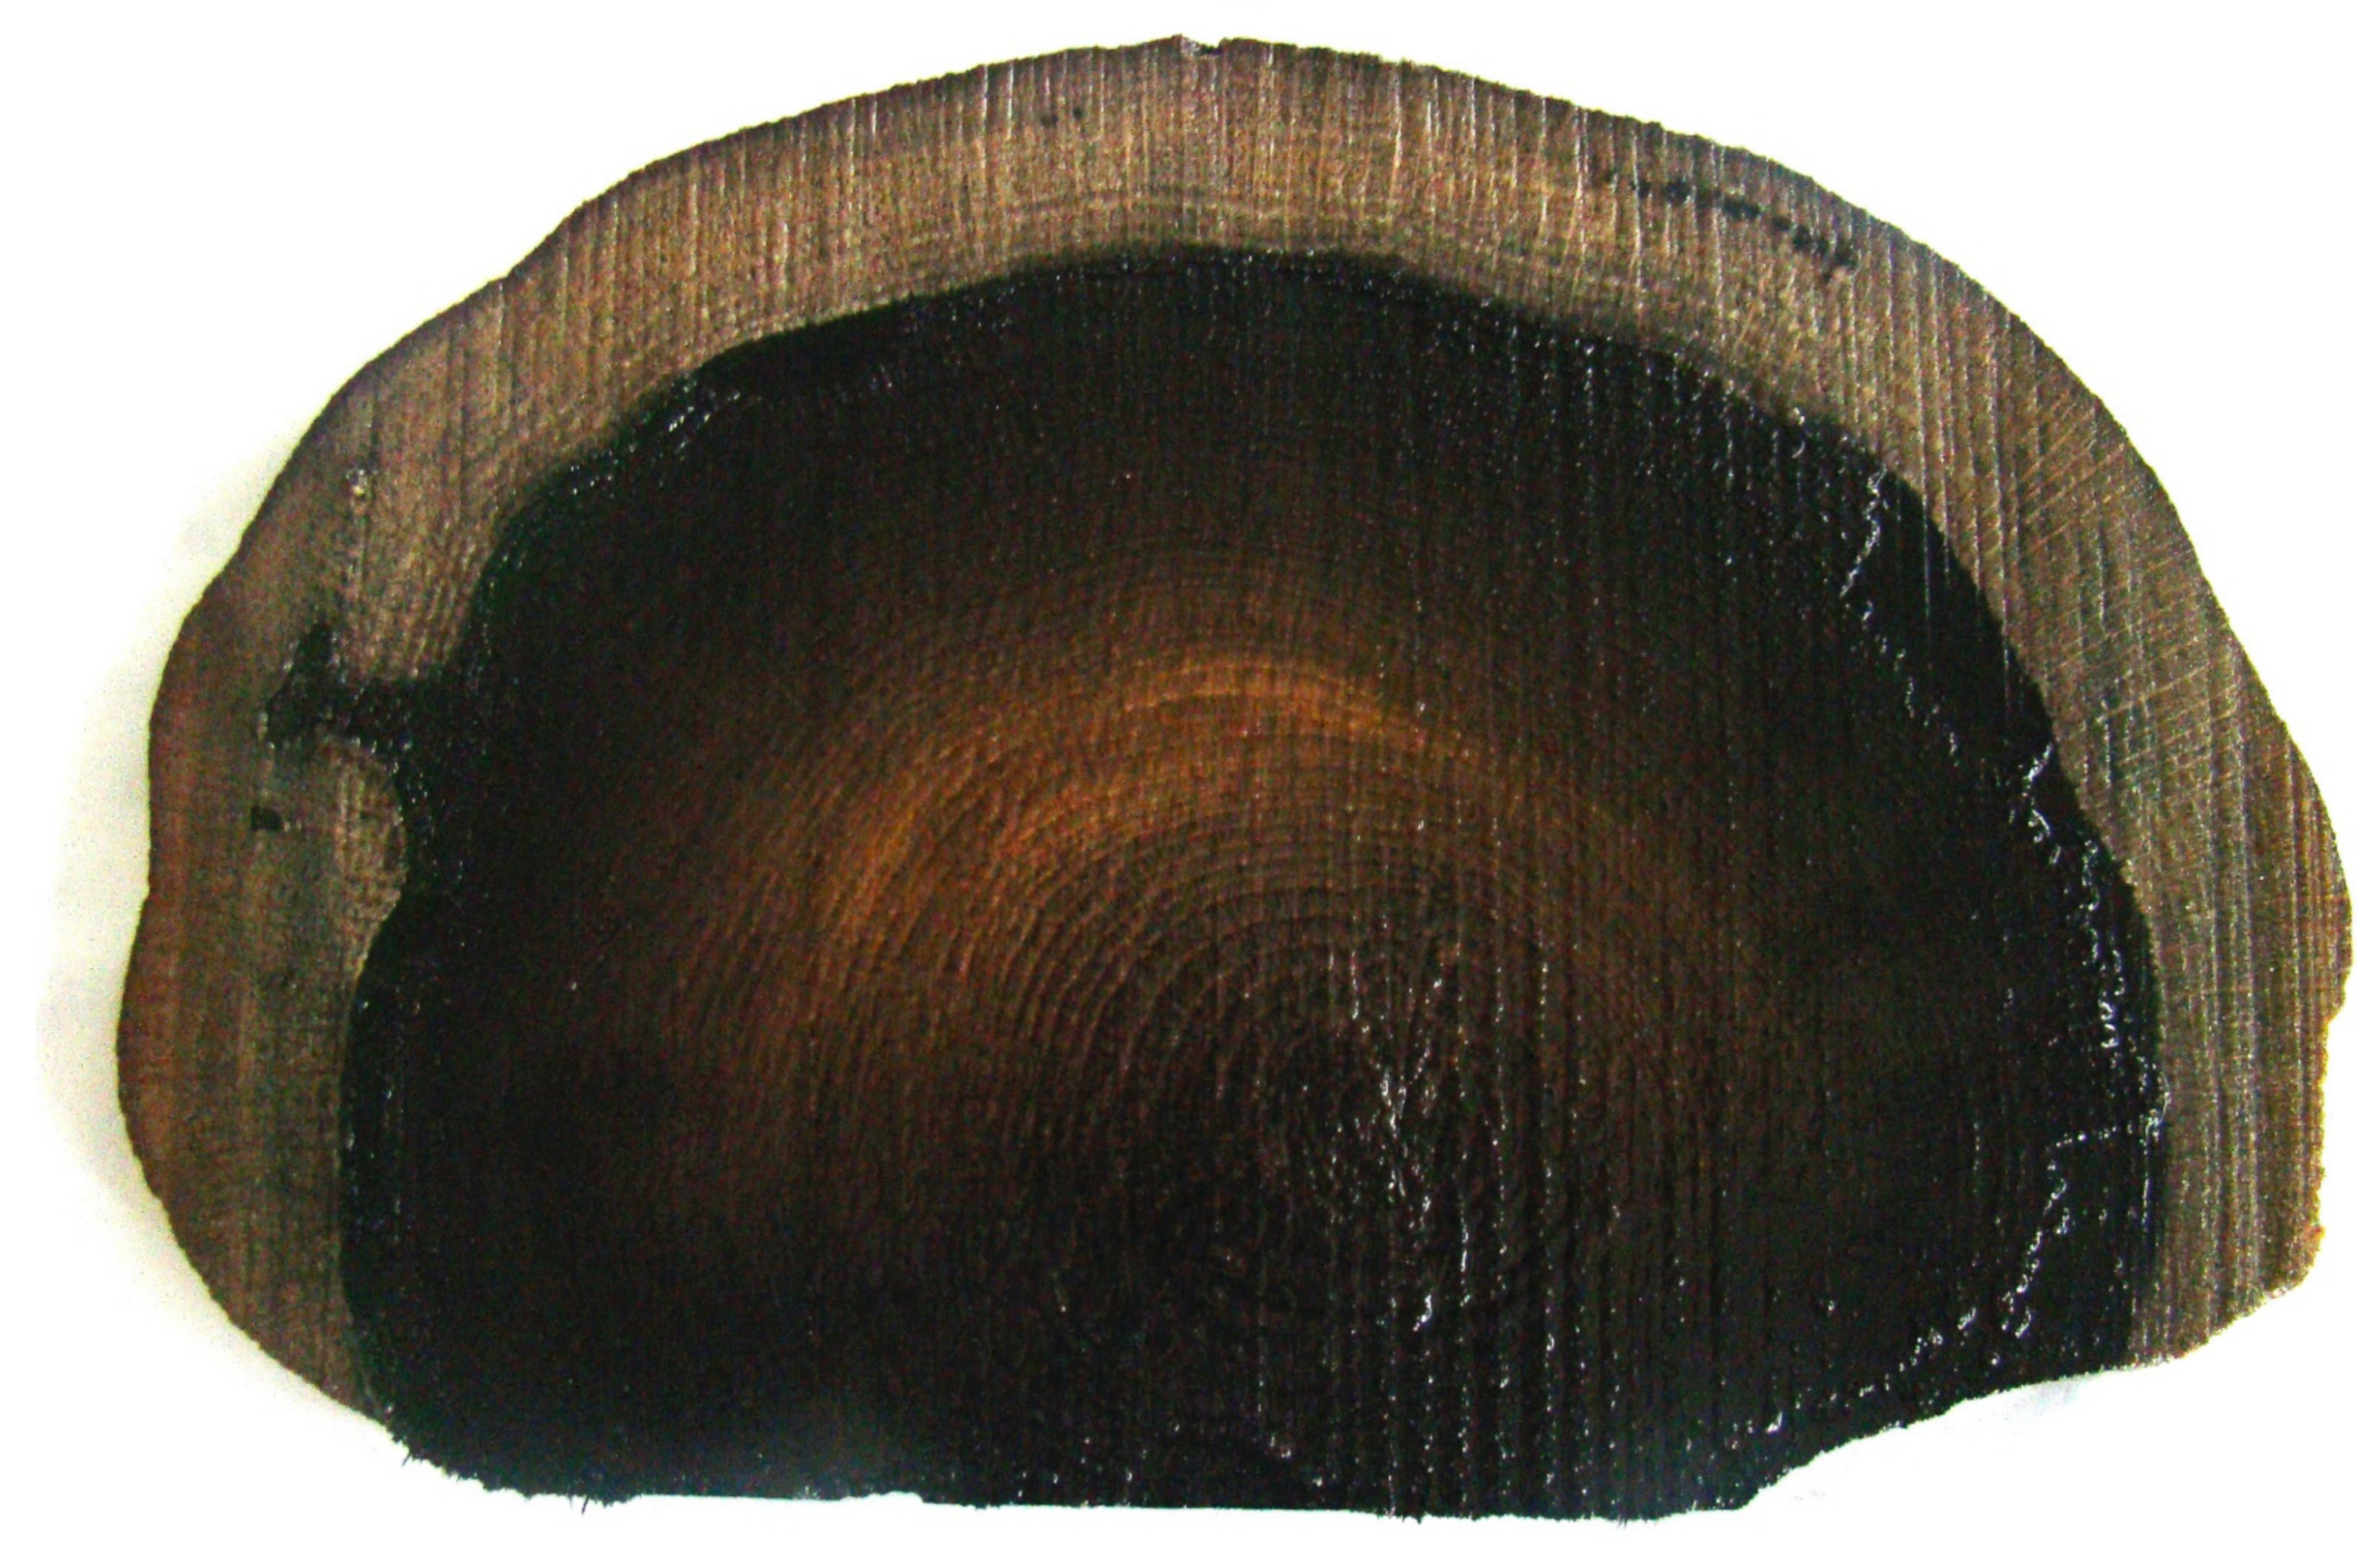 Wilson Birch Logs 1 to 1.5 inch x 17-18 inch Long - Set of 12 Logs